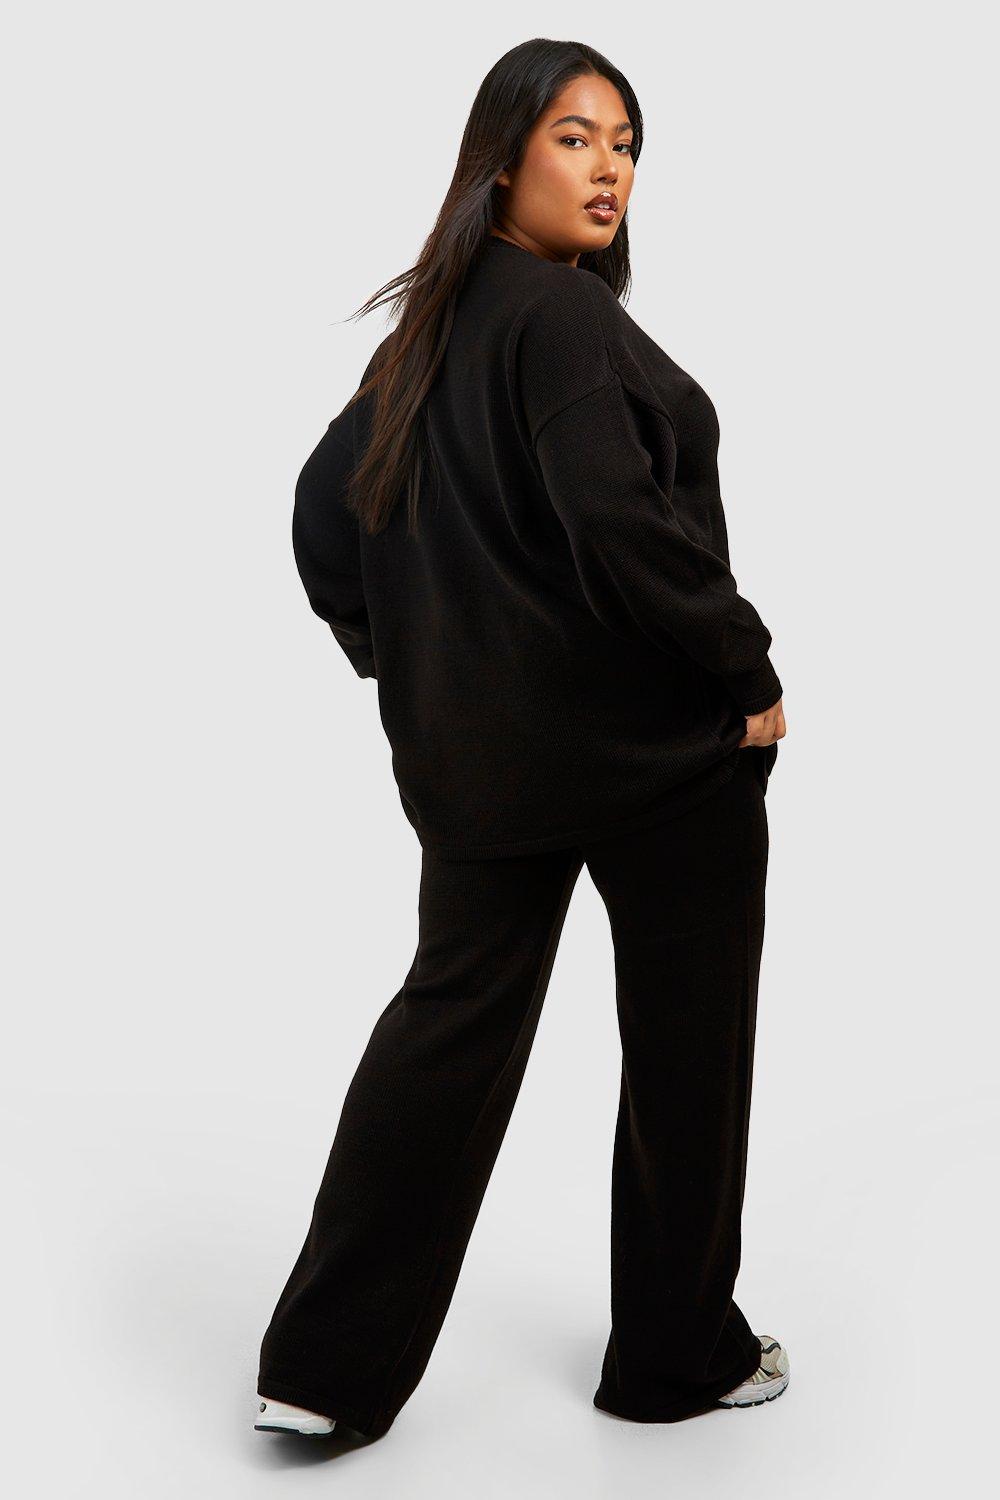 https://media.boohoo.com/i/boohoo/pzz04832_black_xl_1/female-black-plus-knitted-crew-neck-sweater-&-pants-set